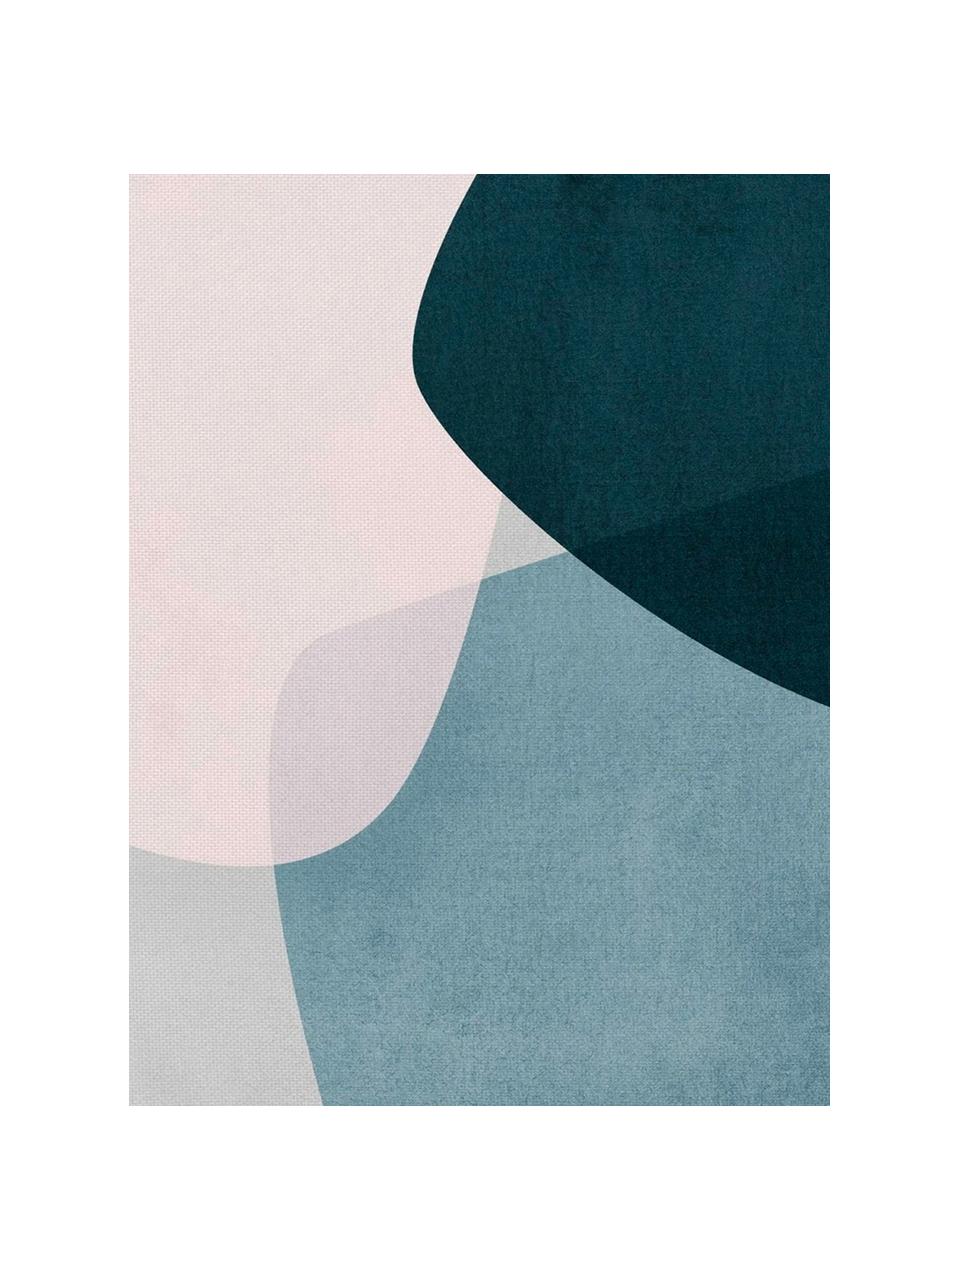 Textilné servítky Graphic, 4 ks, Tmavomodrá, modrá, sivá, bledoružová